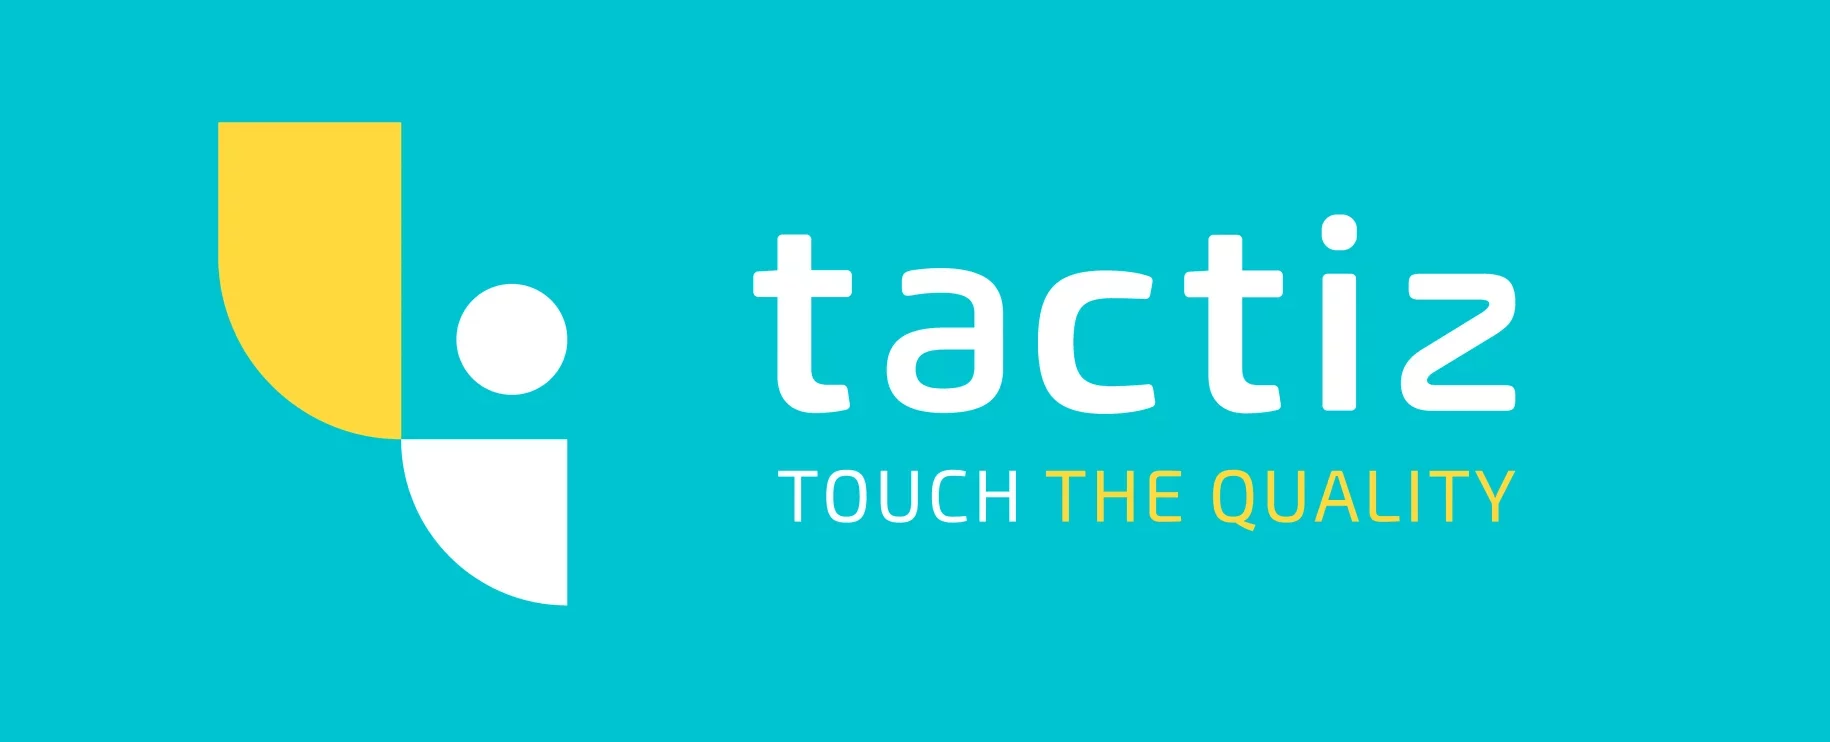 Tactiz, logo | Bonne Nouvelle, Agence Communication, Valence (Drôme)